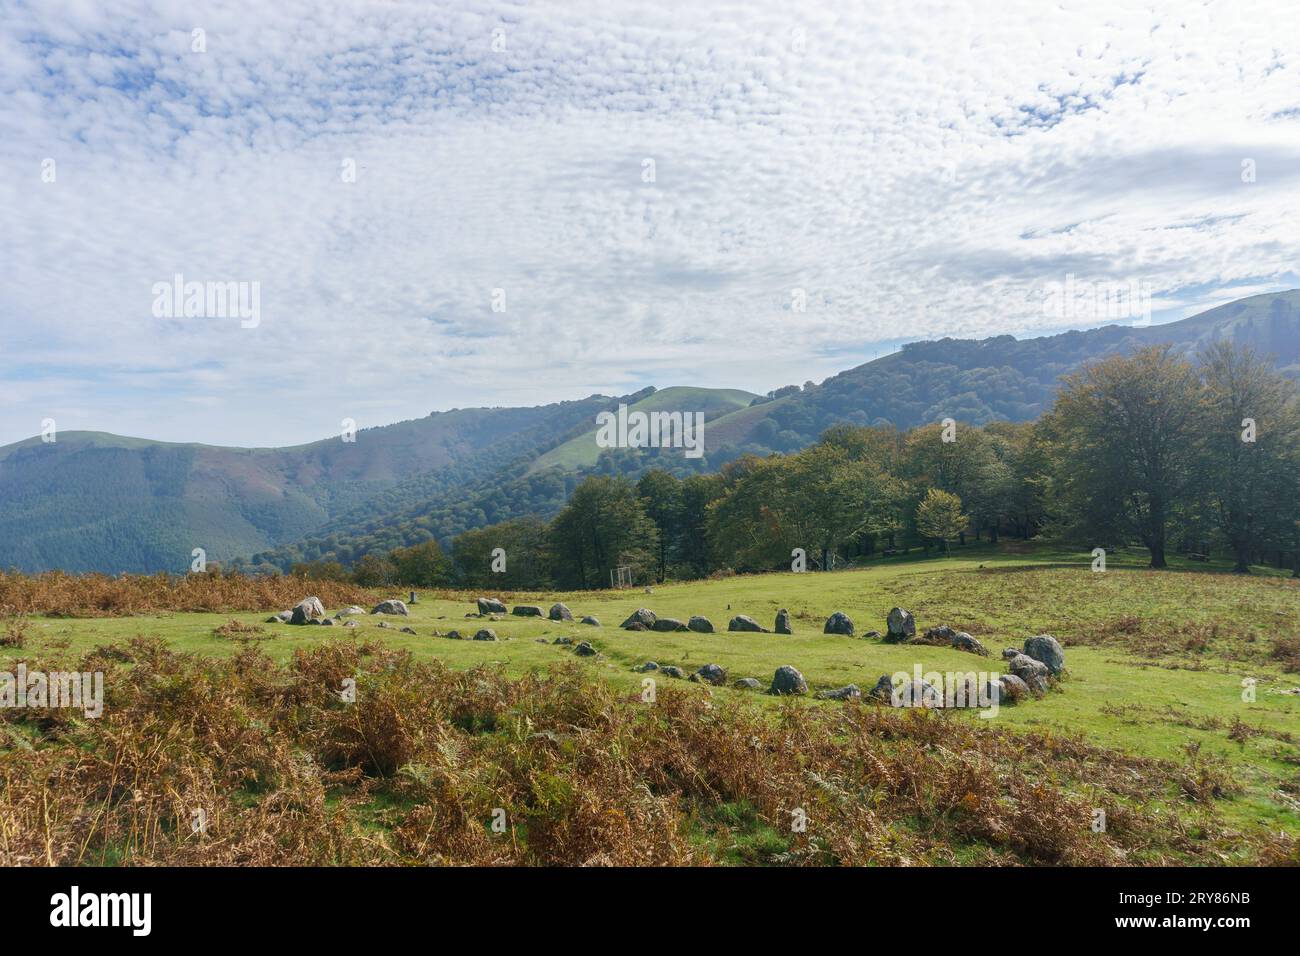 Stone circle Cromlech of Oianleku Harrespila with beautiful mountain landscape in autumn, Aiako Harria, Basque Country, Spain Stock Photo